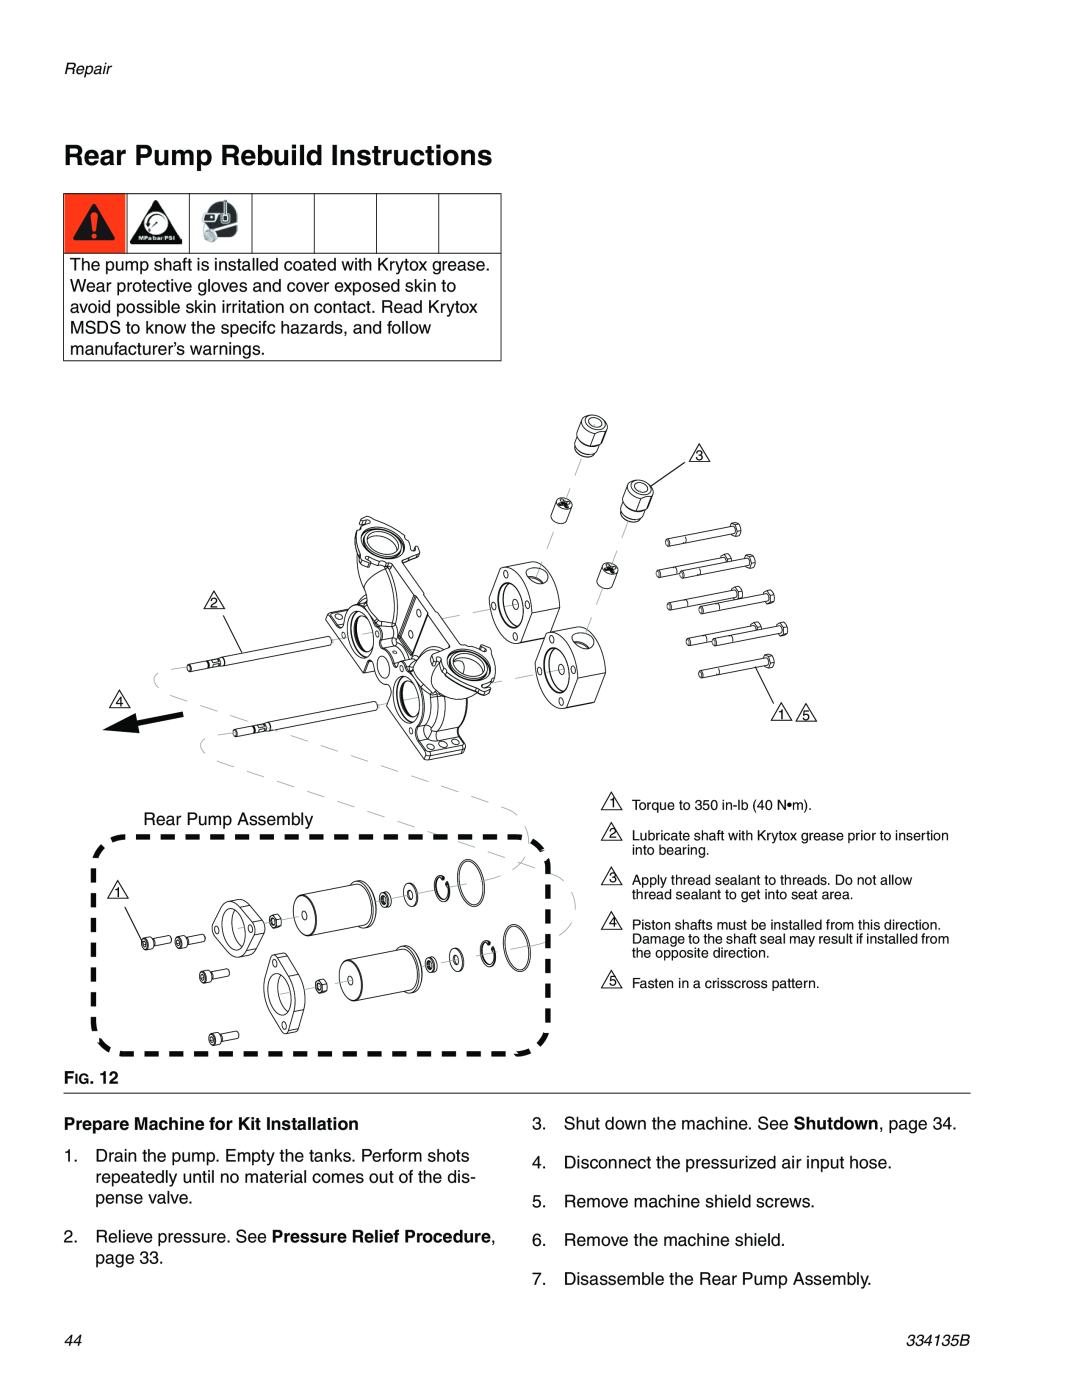 Graco 334135B Rear Pump Rebuild Instructions, Relieve pressure. See Pressure Relief Procedure, page 